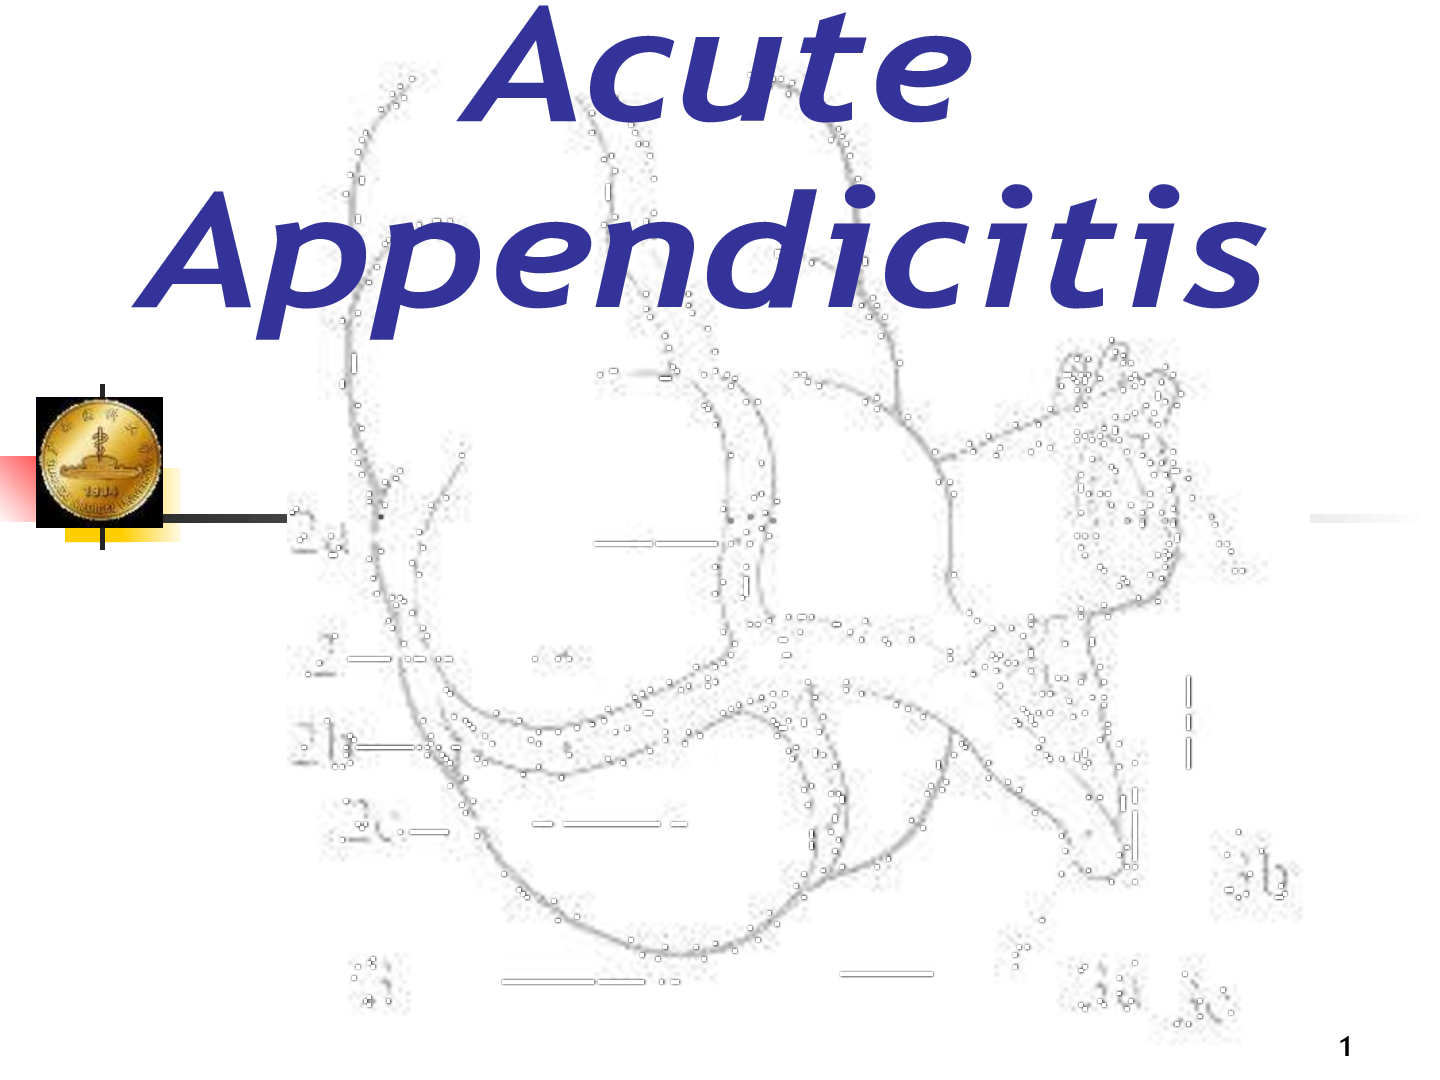 Acute Appendicitis ANATOMY AN 310